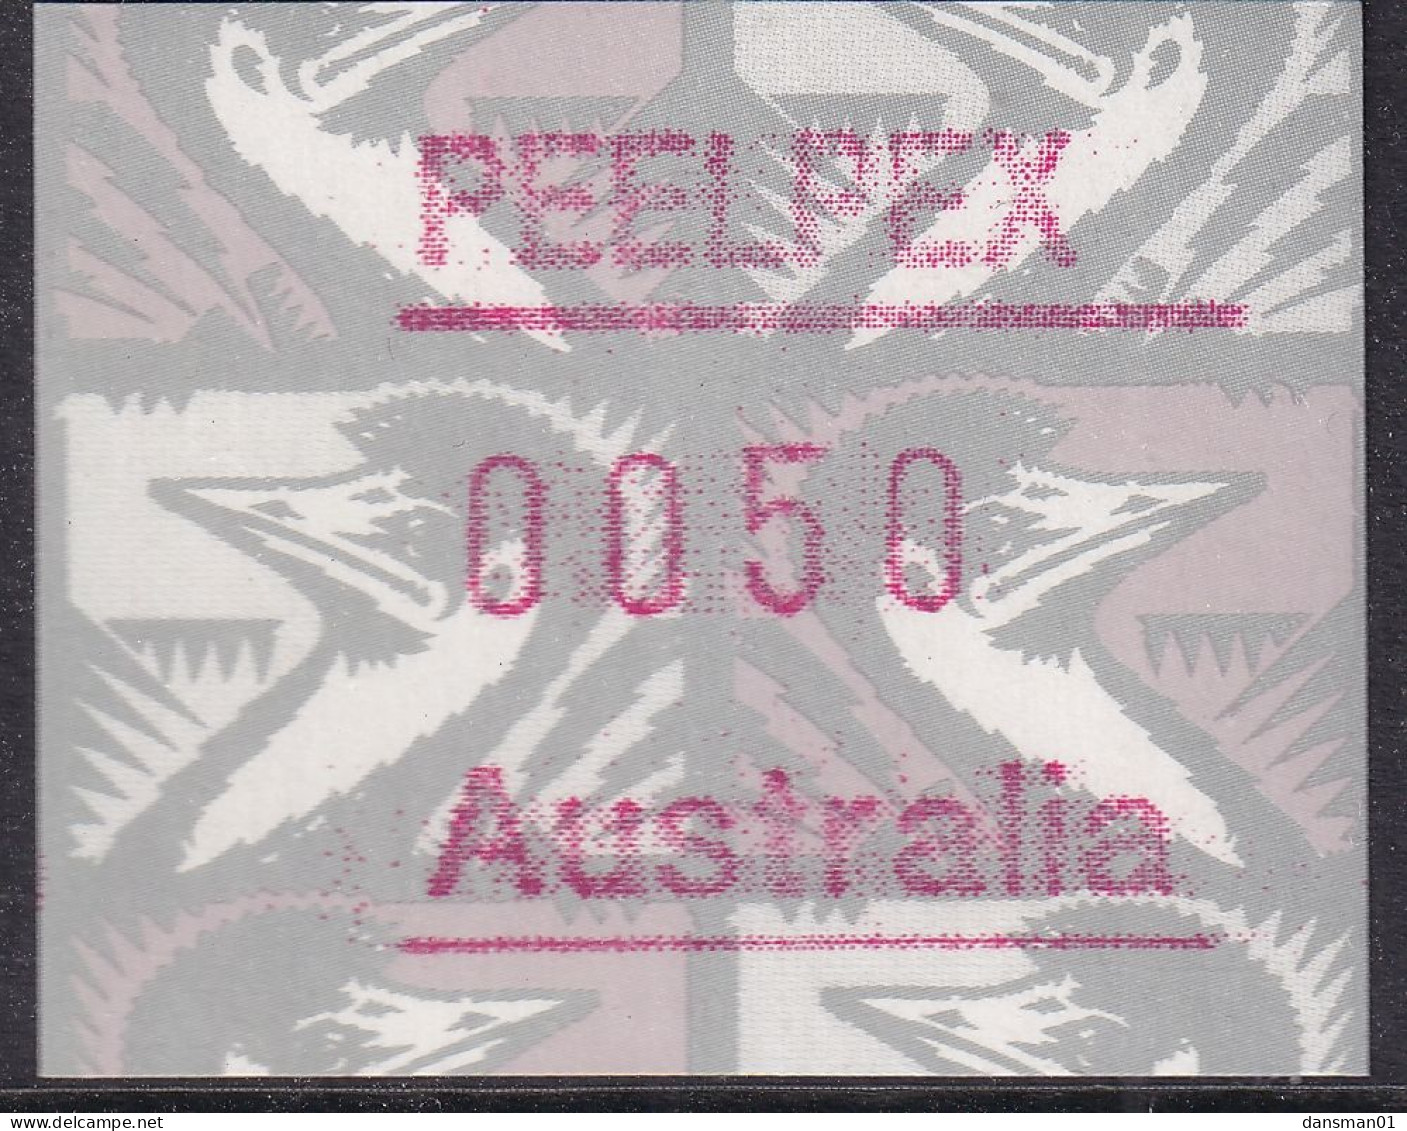 AUSTRALIA 1993 FRAMA  "PEELPEX" MNH - Automatenmarken [ATM]